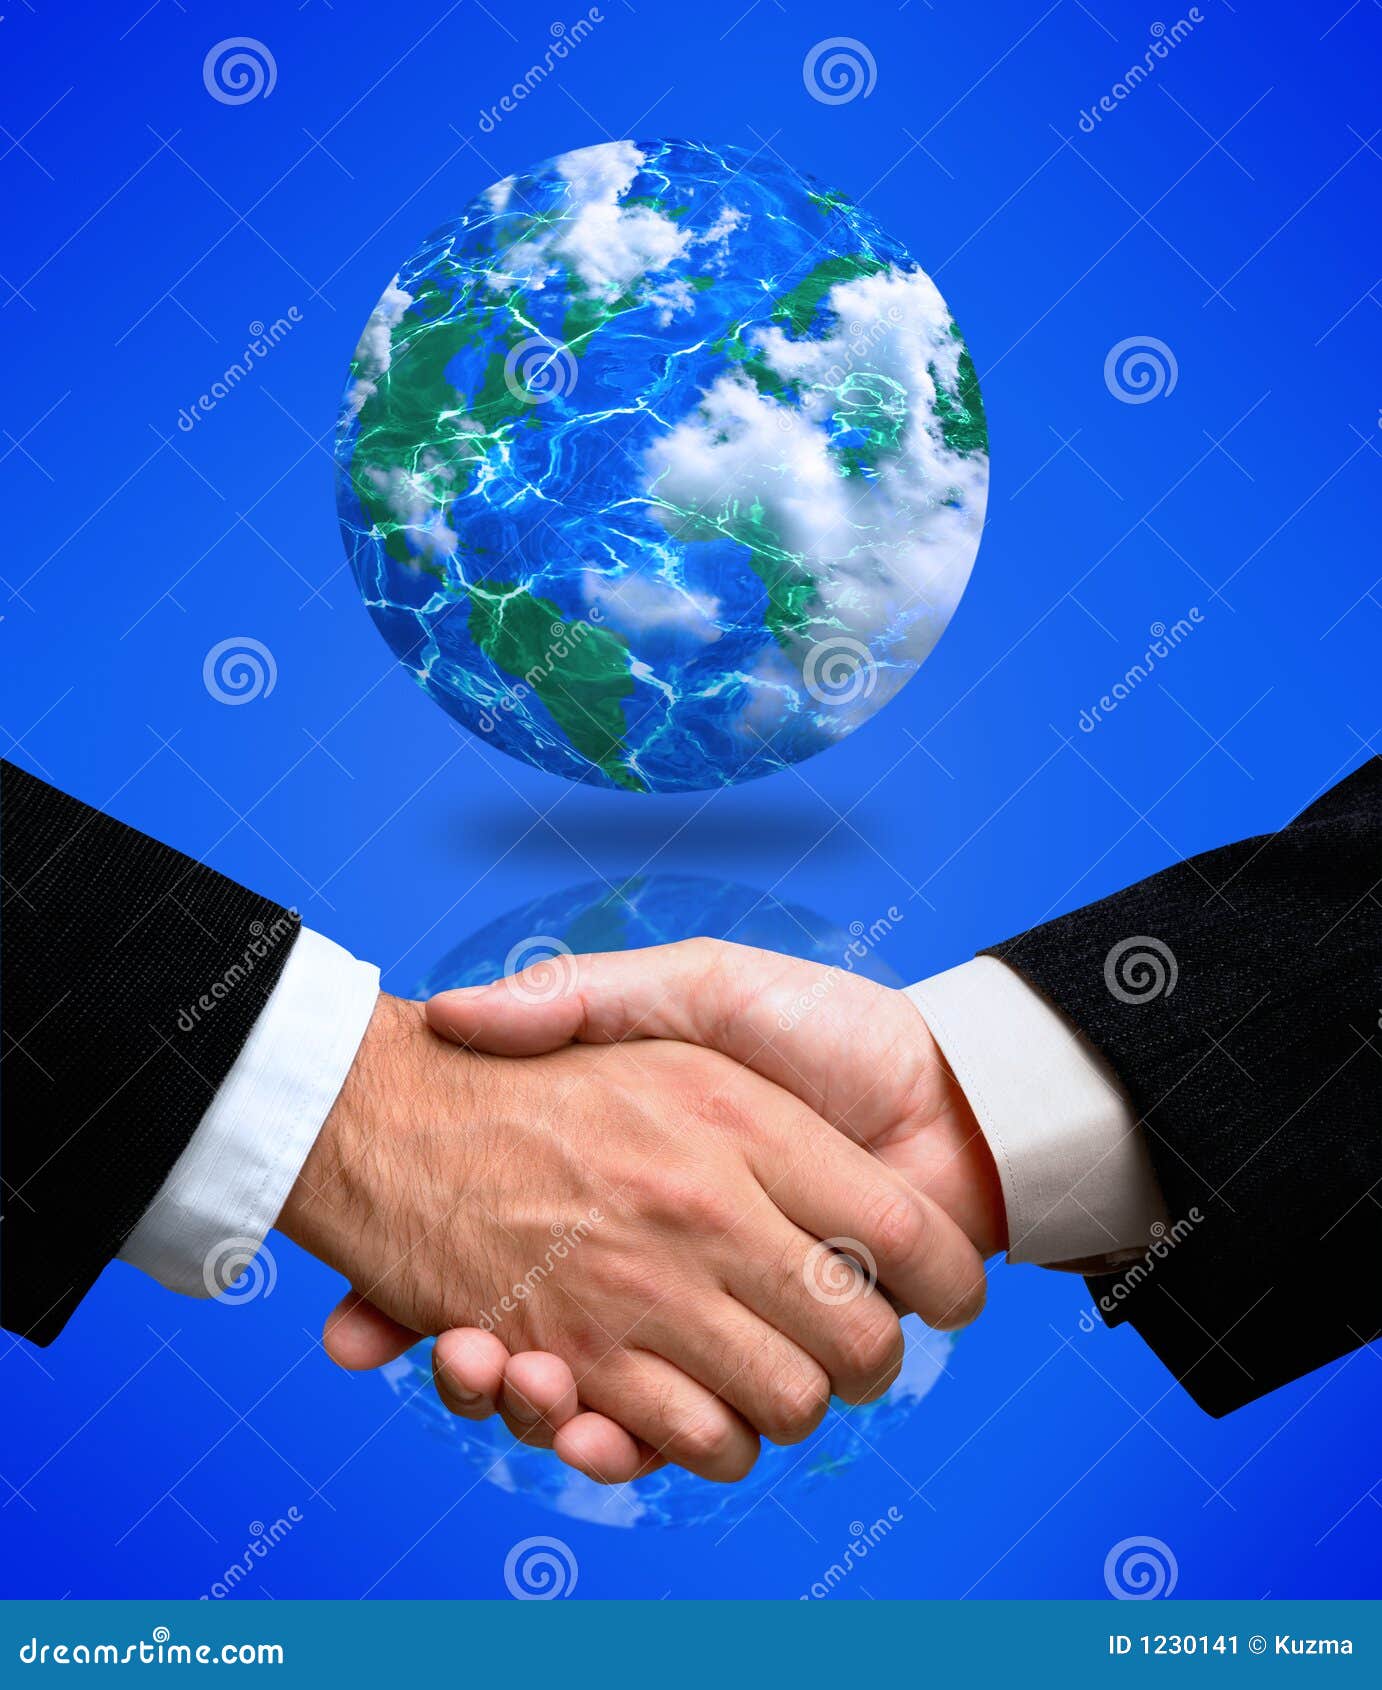 Global alliance